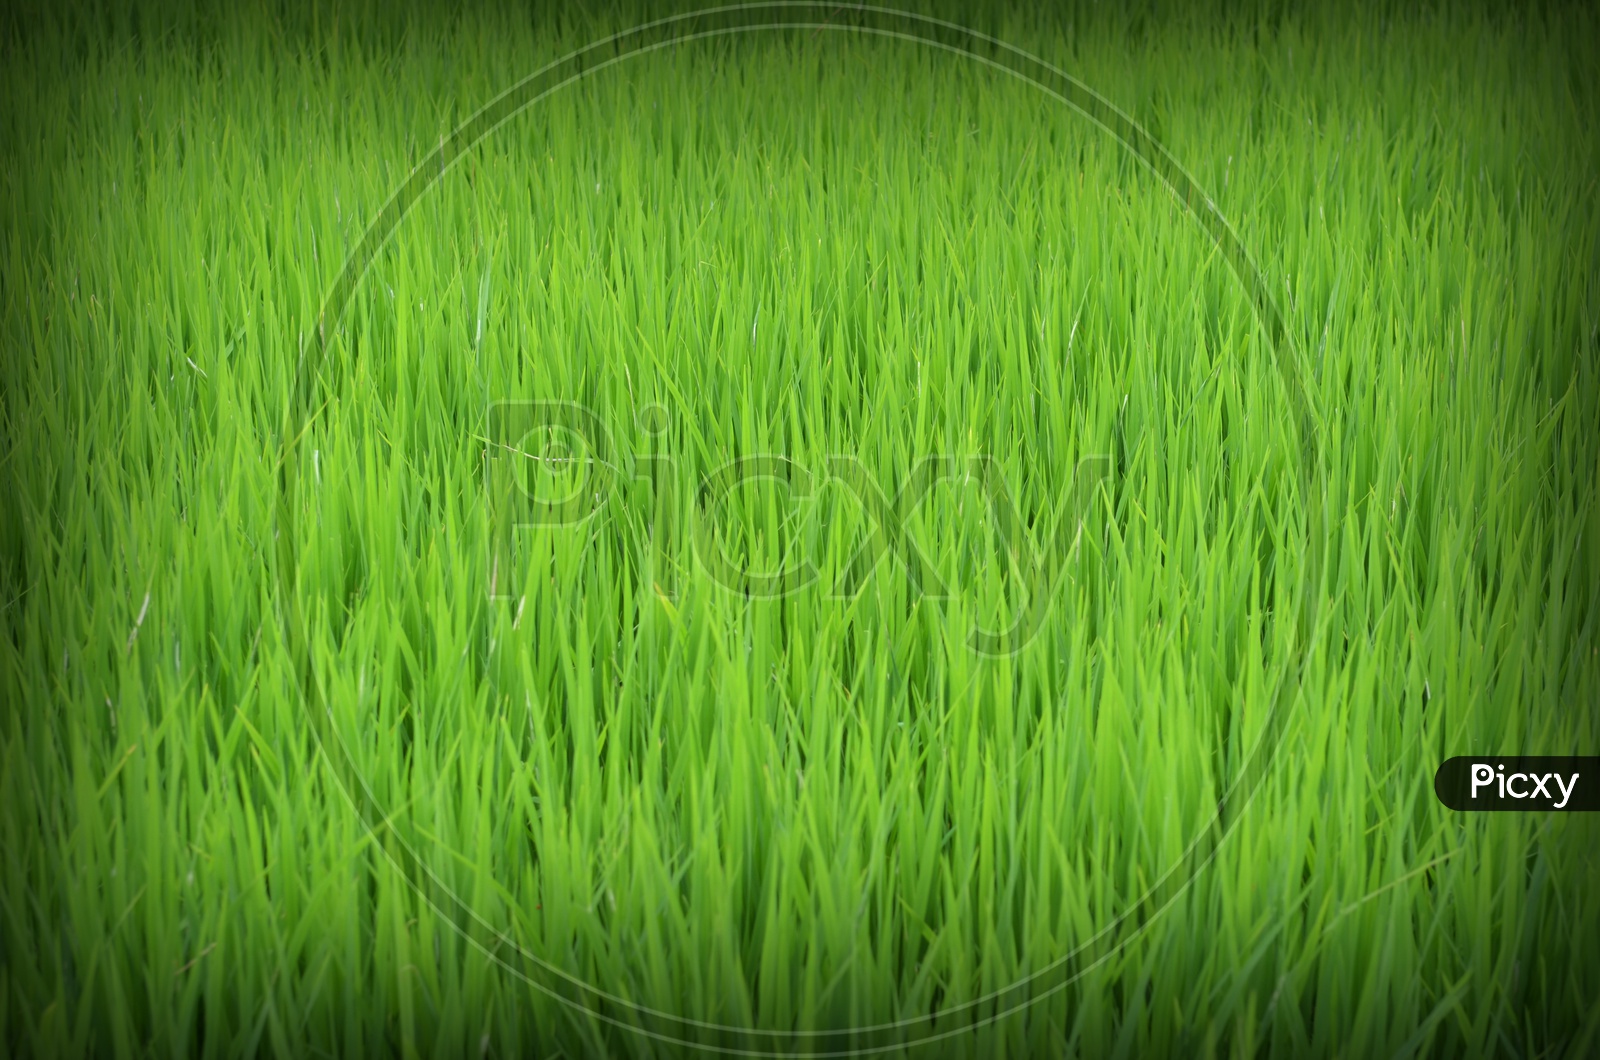 Rice fields of Thailand